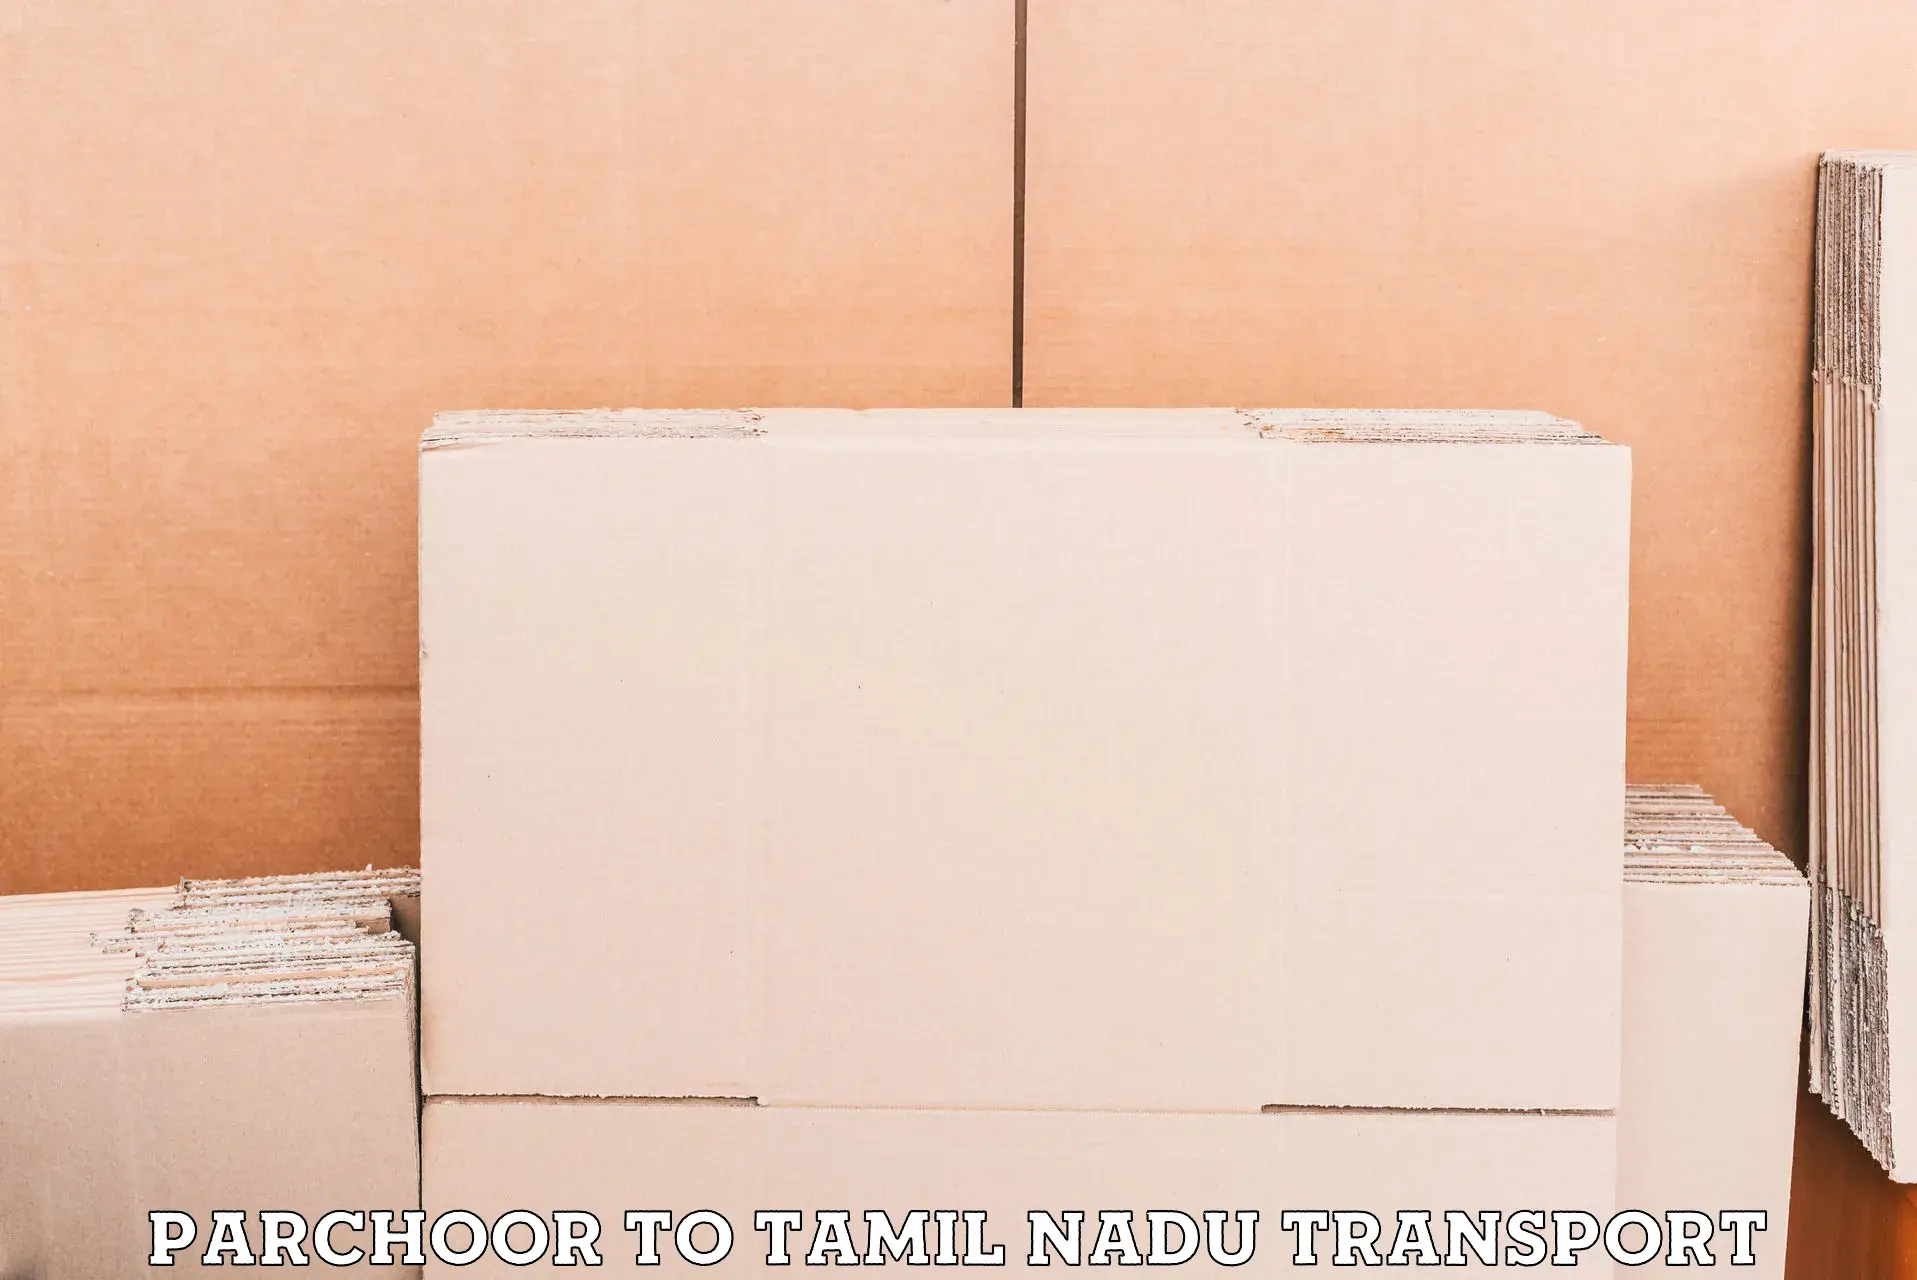 Transport in sharing Parchoor to Tamil Nadu